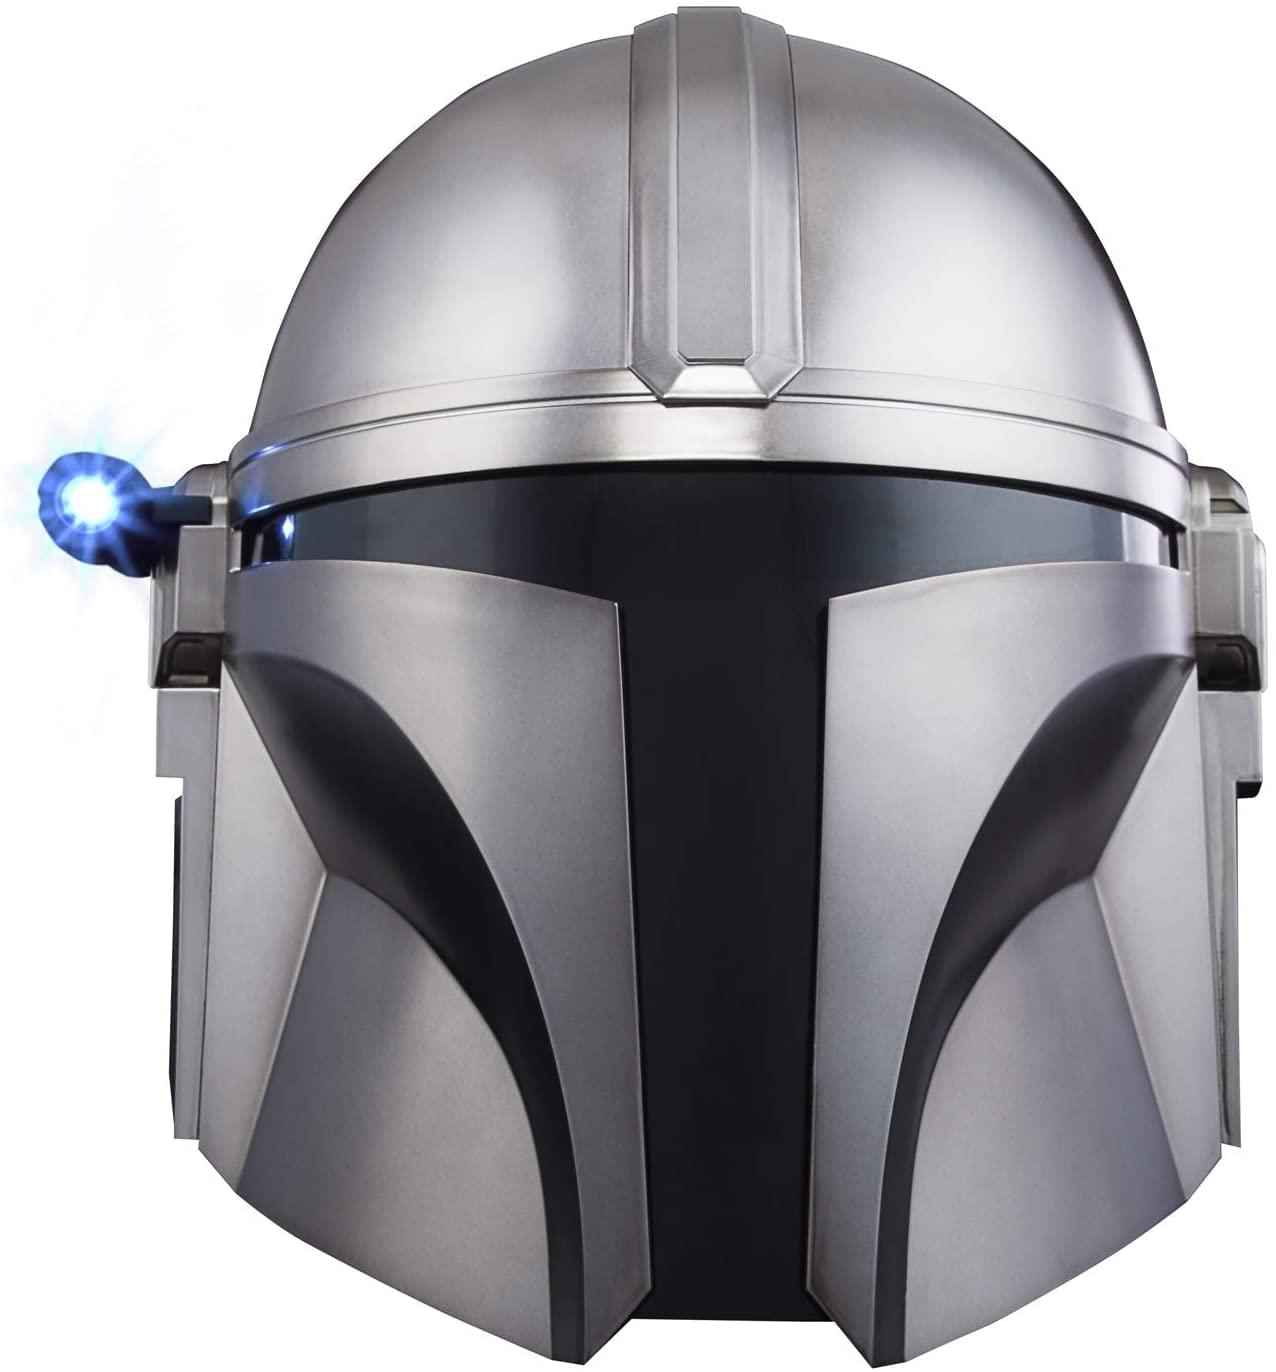 Star Wars Black Series The Mandalorian Premium Electronic Roleplay Helmet